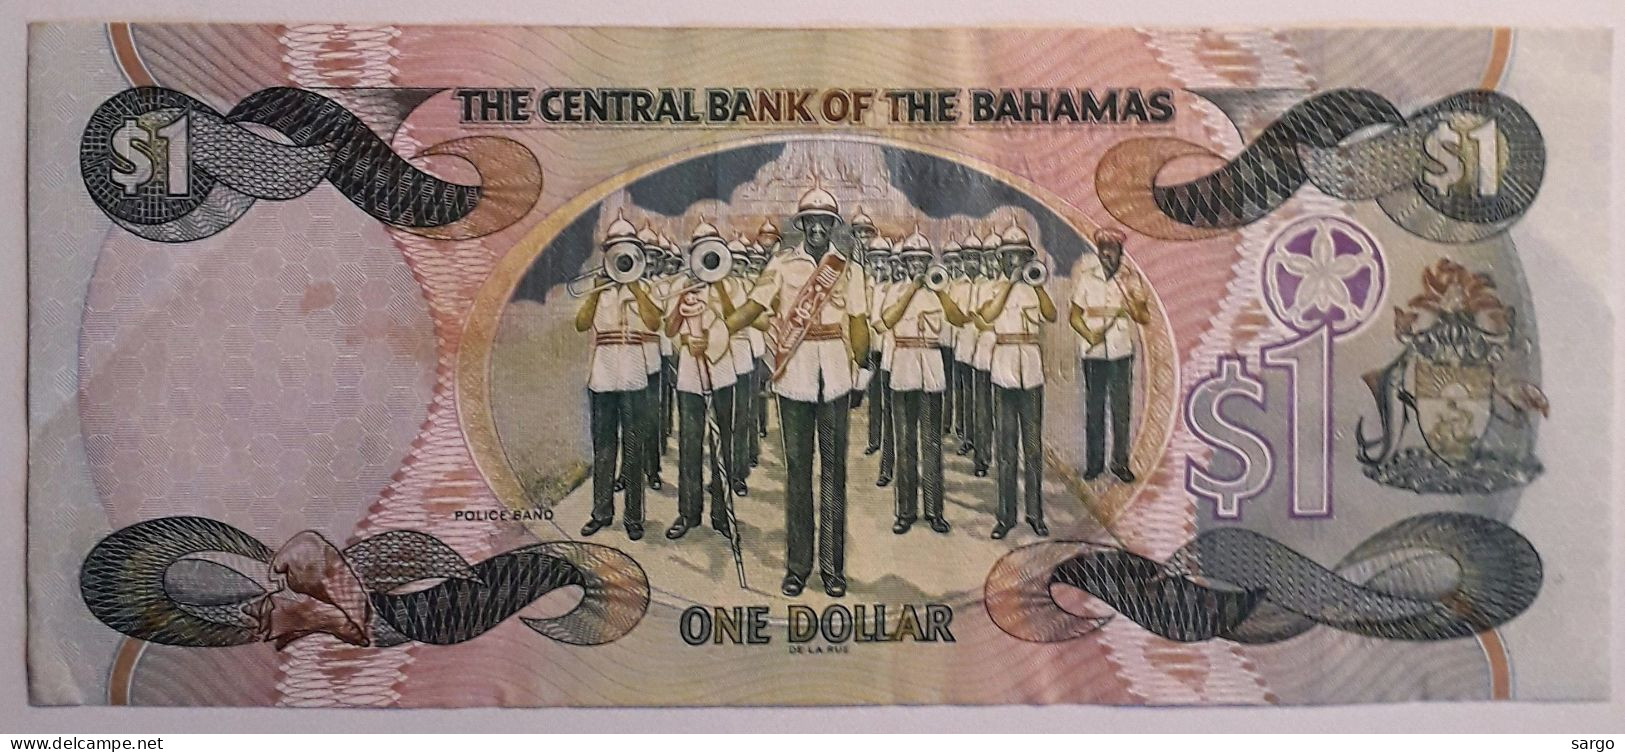 BAHAMAS - 1 DOLLAR - 2001- UNC - P 69 - BANKNOTES - PAPER MONEY - CARTAMONETA - - Bahama's